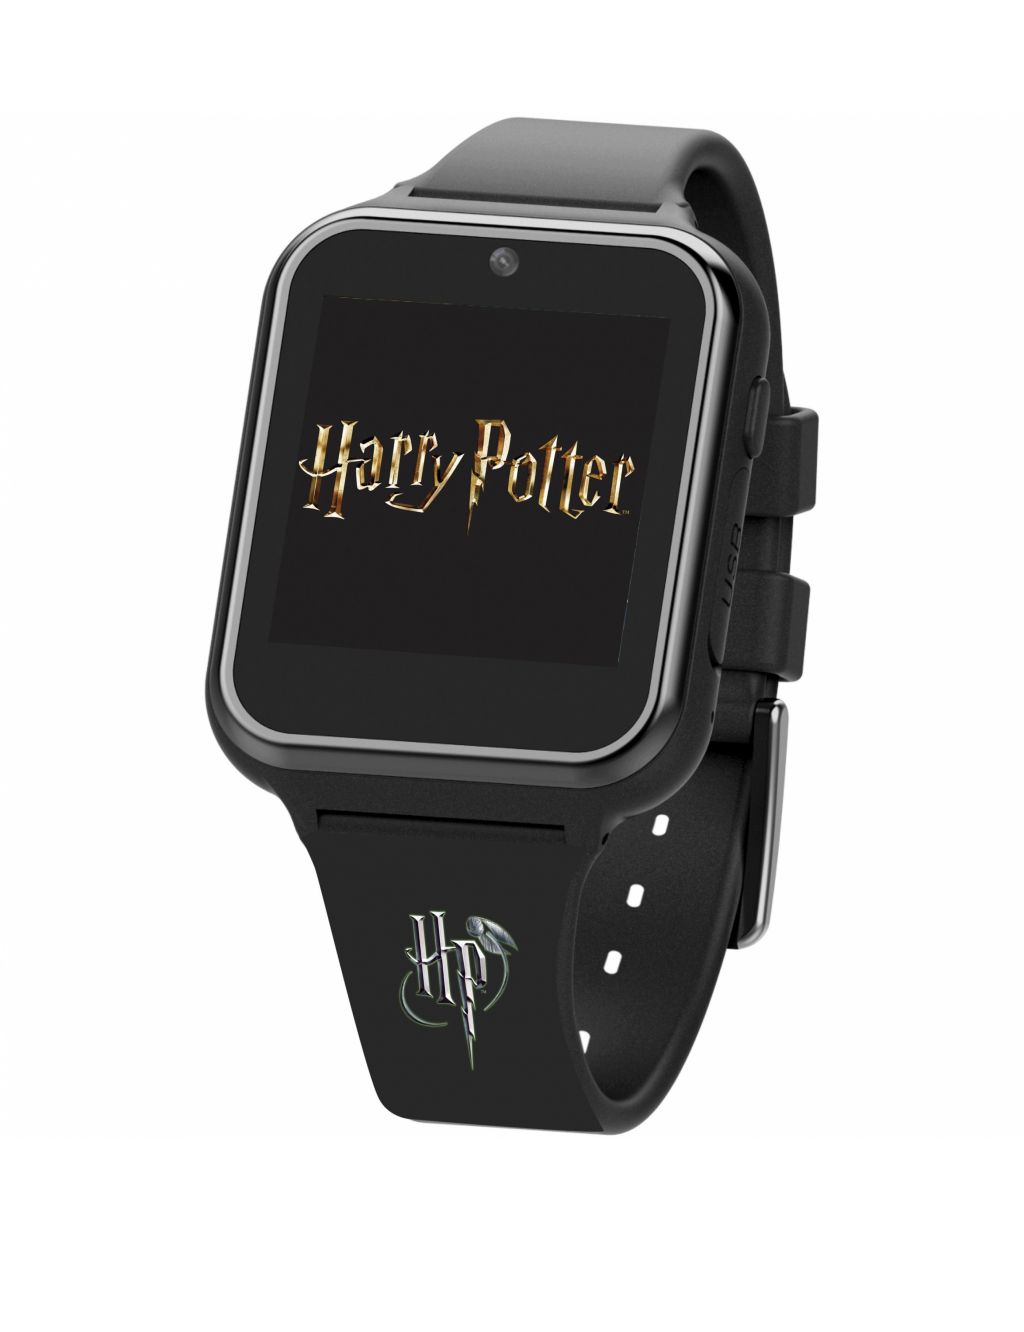 Harry Potter™ Fitness Tracker Smartwatch image 3